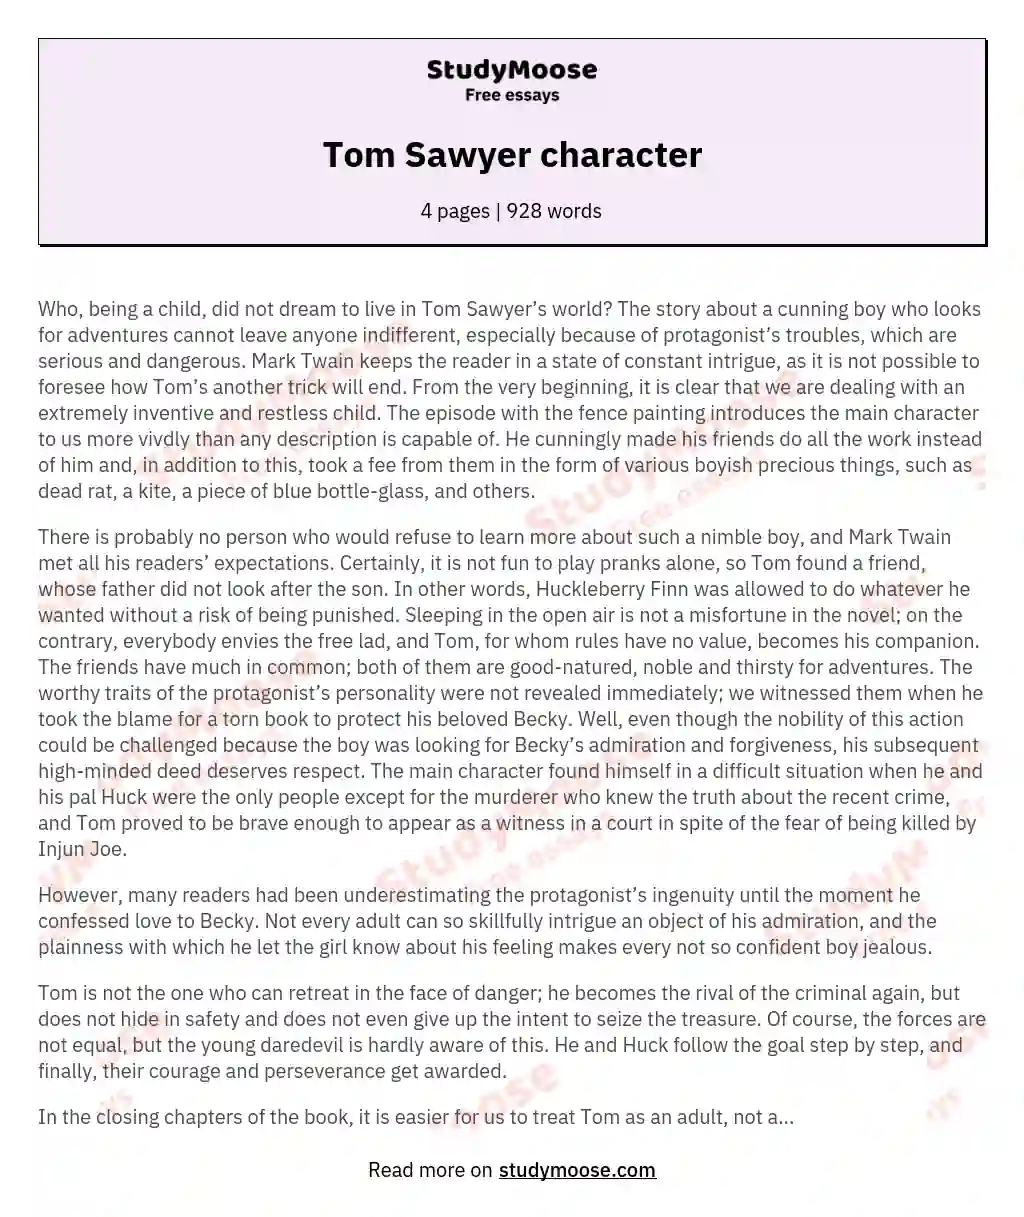 Tom Sawyer character